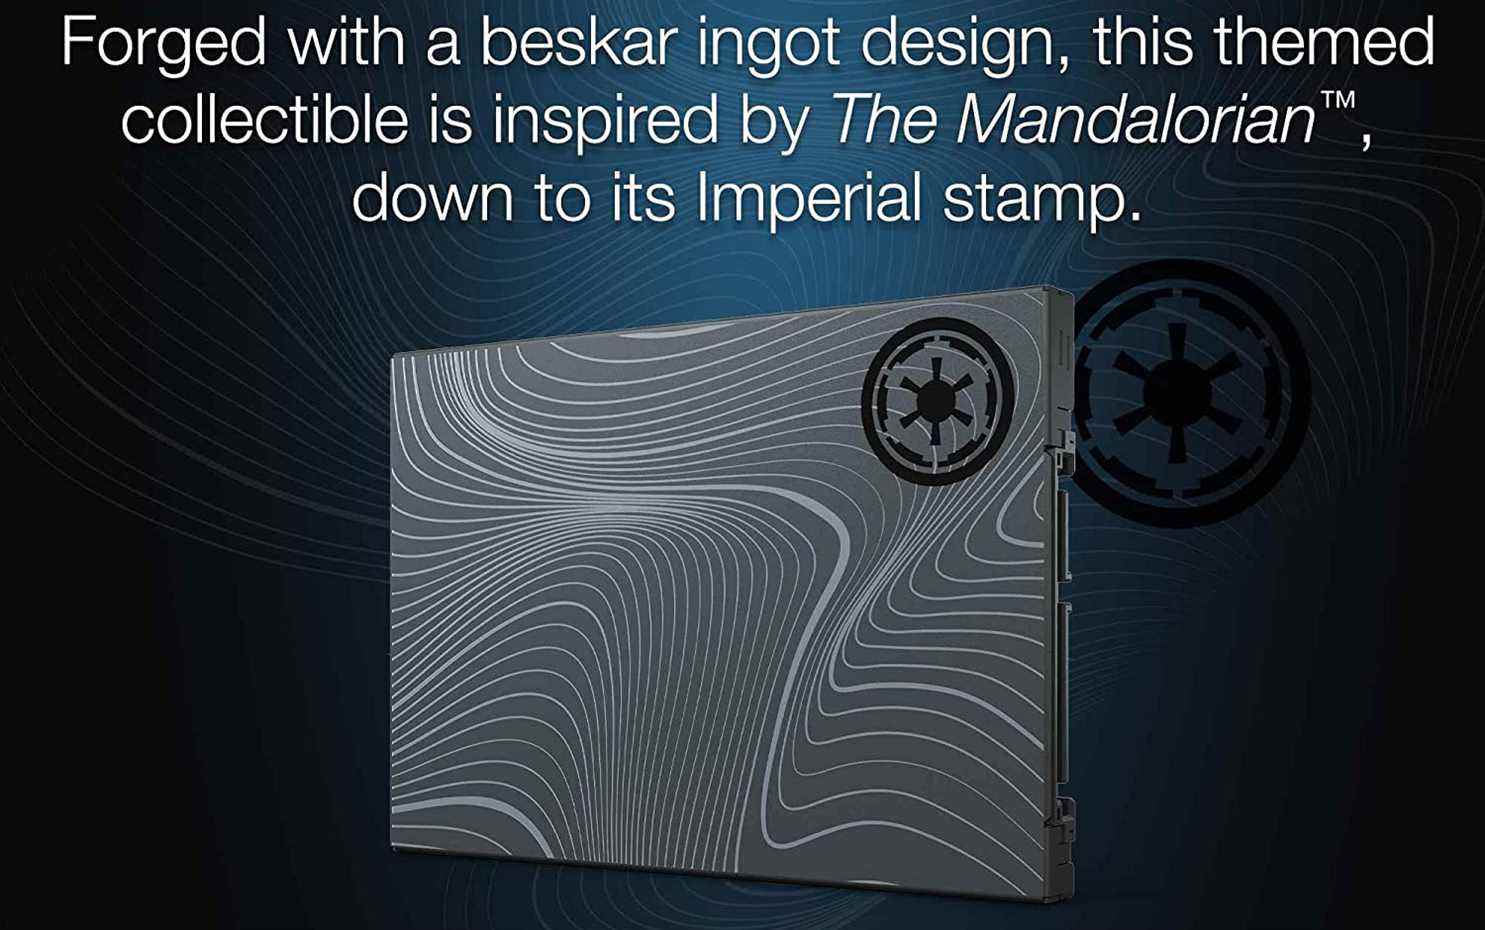 Disques Seagate Star Wars Beskar Lingot